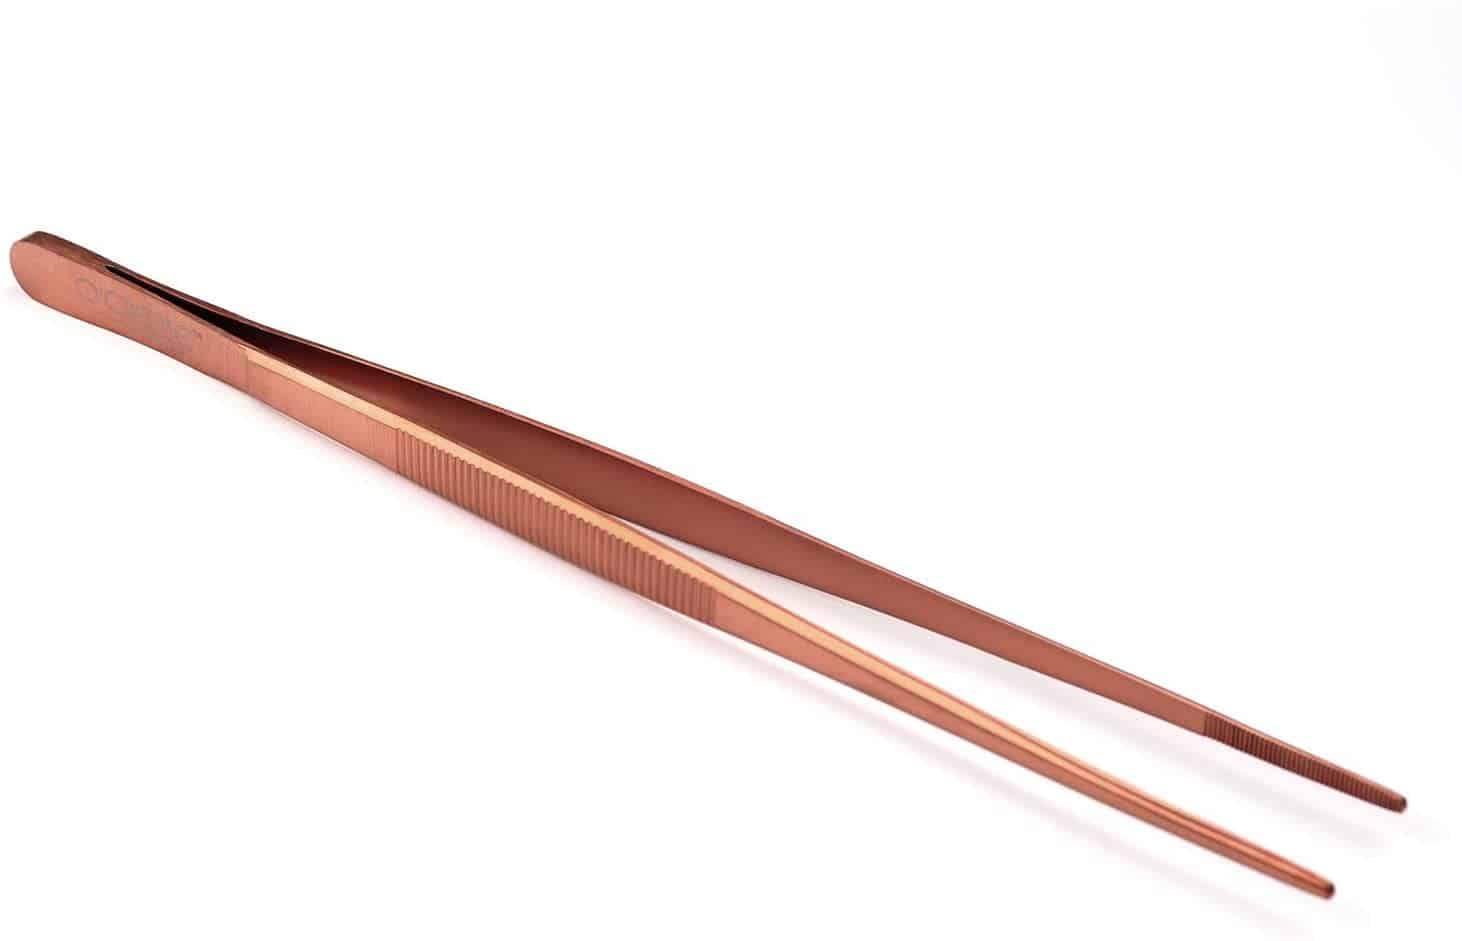 Best precision tweezers: O'Creme 10 Inch Rose Gold Precision Stainless Steel Kitchen Tweezer